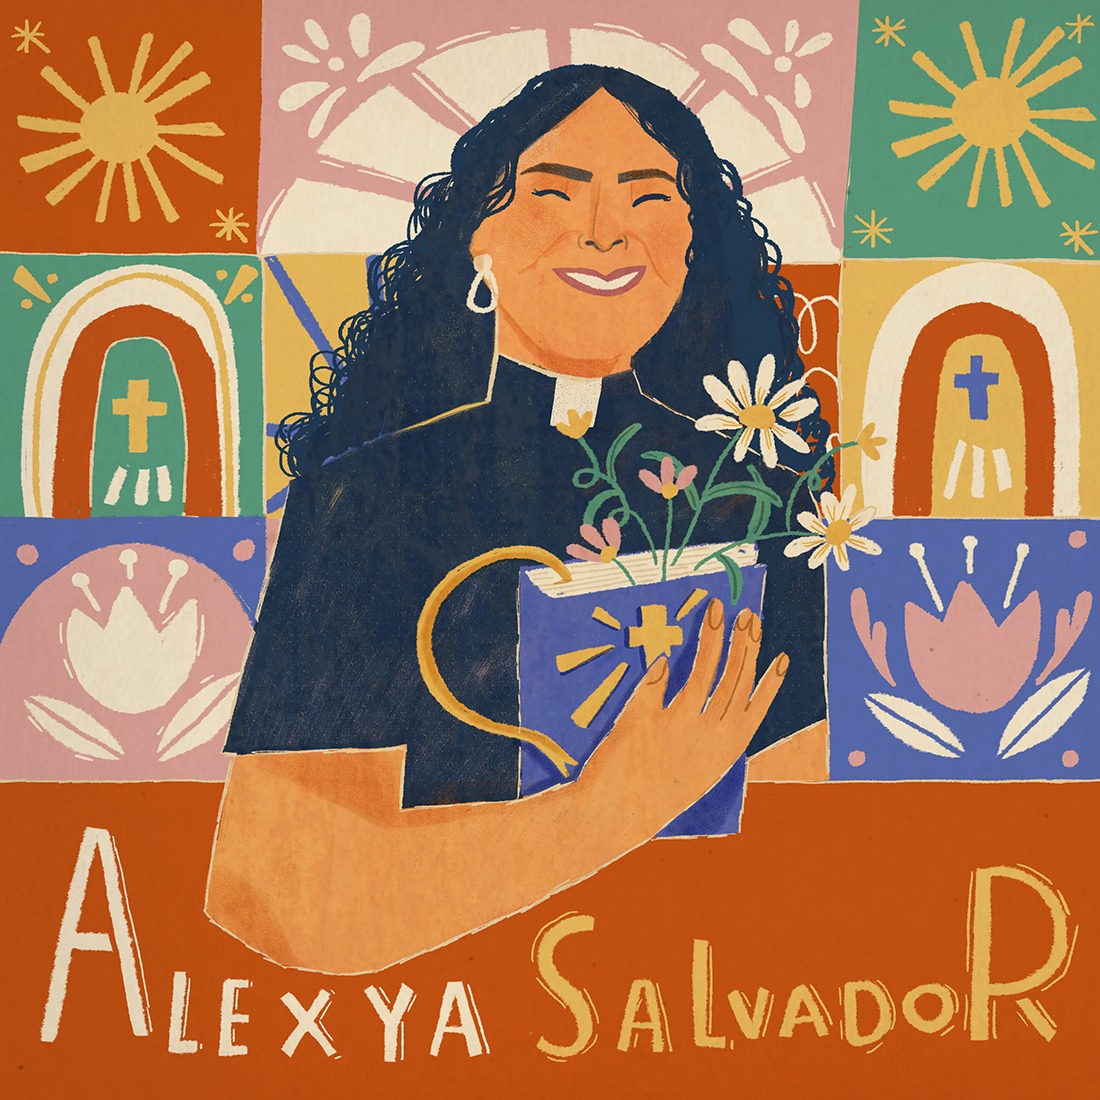 Alexya Salvador